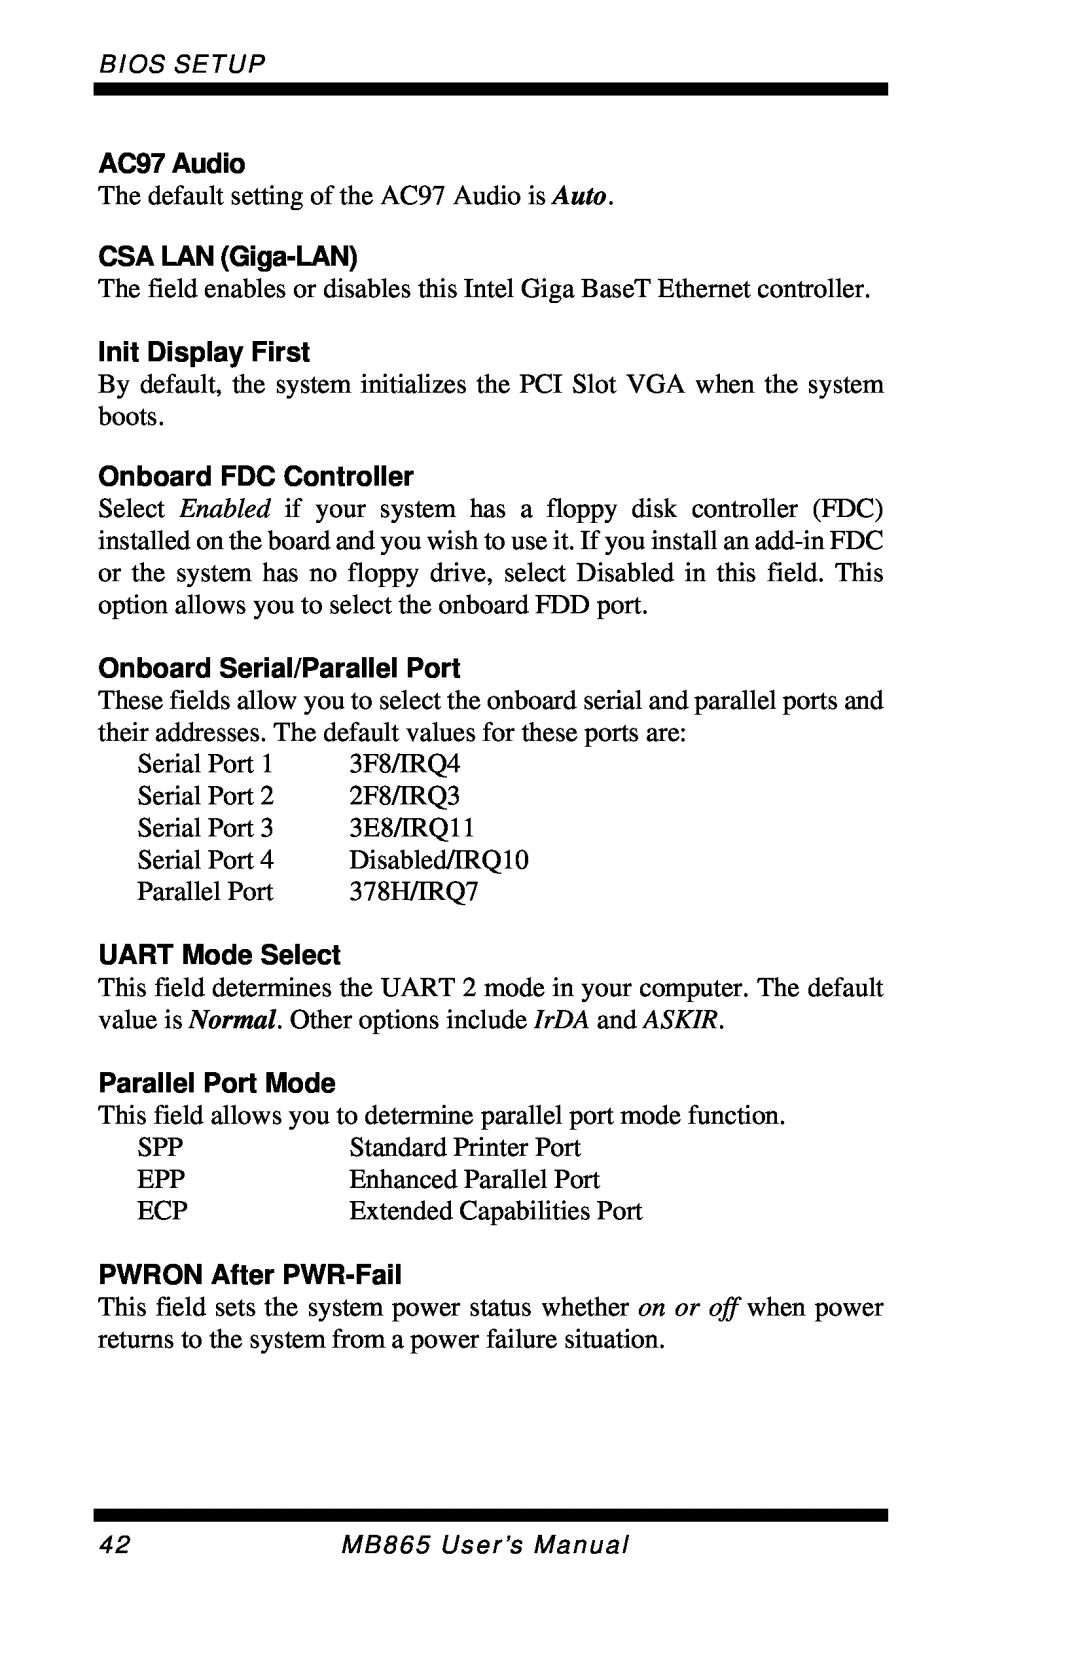 Intel MB865 AC97 Audio, CSA LAN Giga-LAN, Init Display First, Onboard FDC Controller, Onboard Serial/Parallel Port 